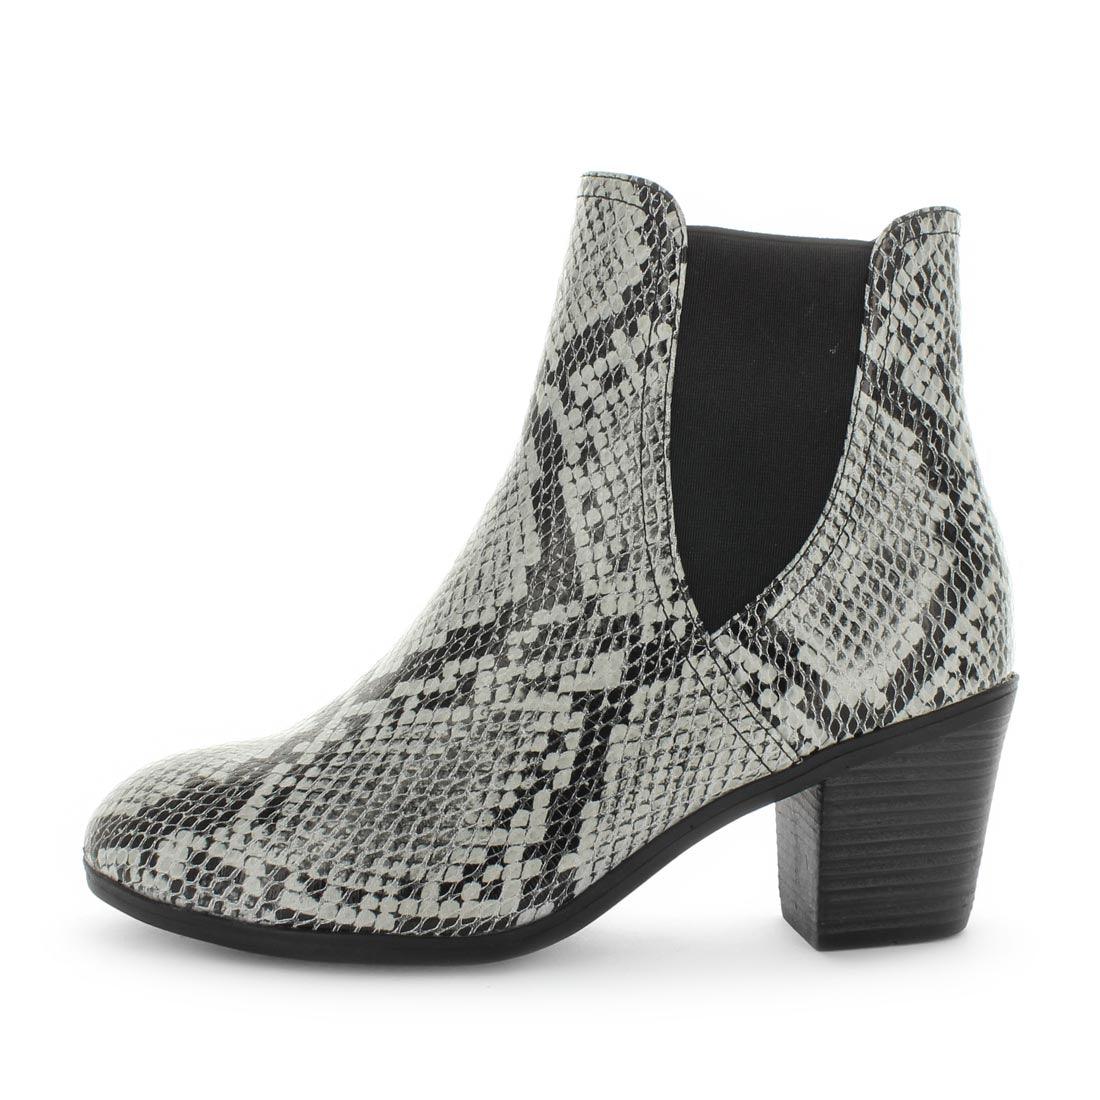 HOLIVIA by ZOLA - iShoes - Sale, Women's Shoes, Women's Shoes: Boots - FOOTWEAR-FOOTWEAR